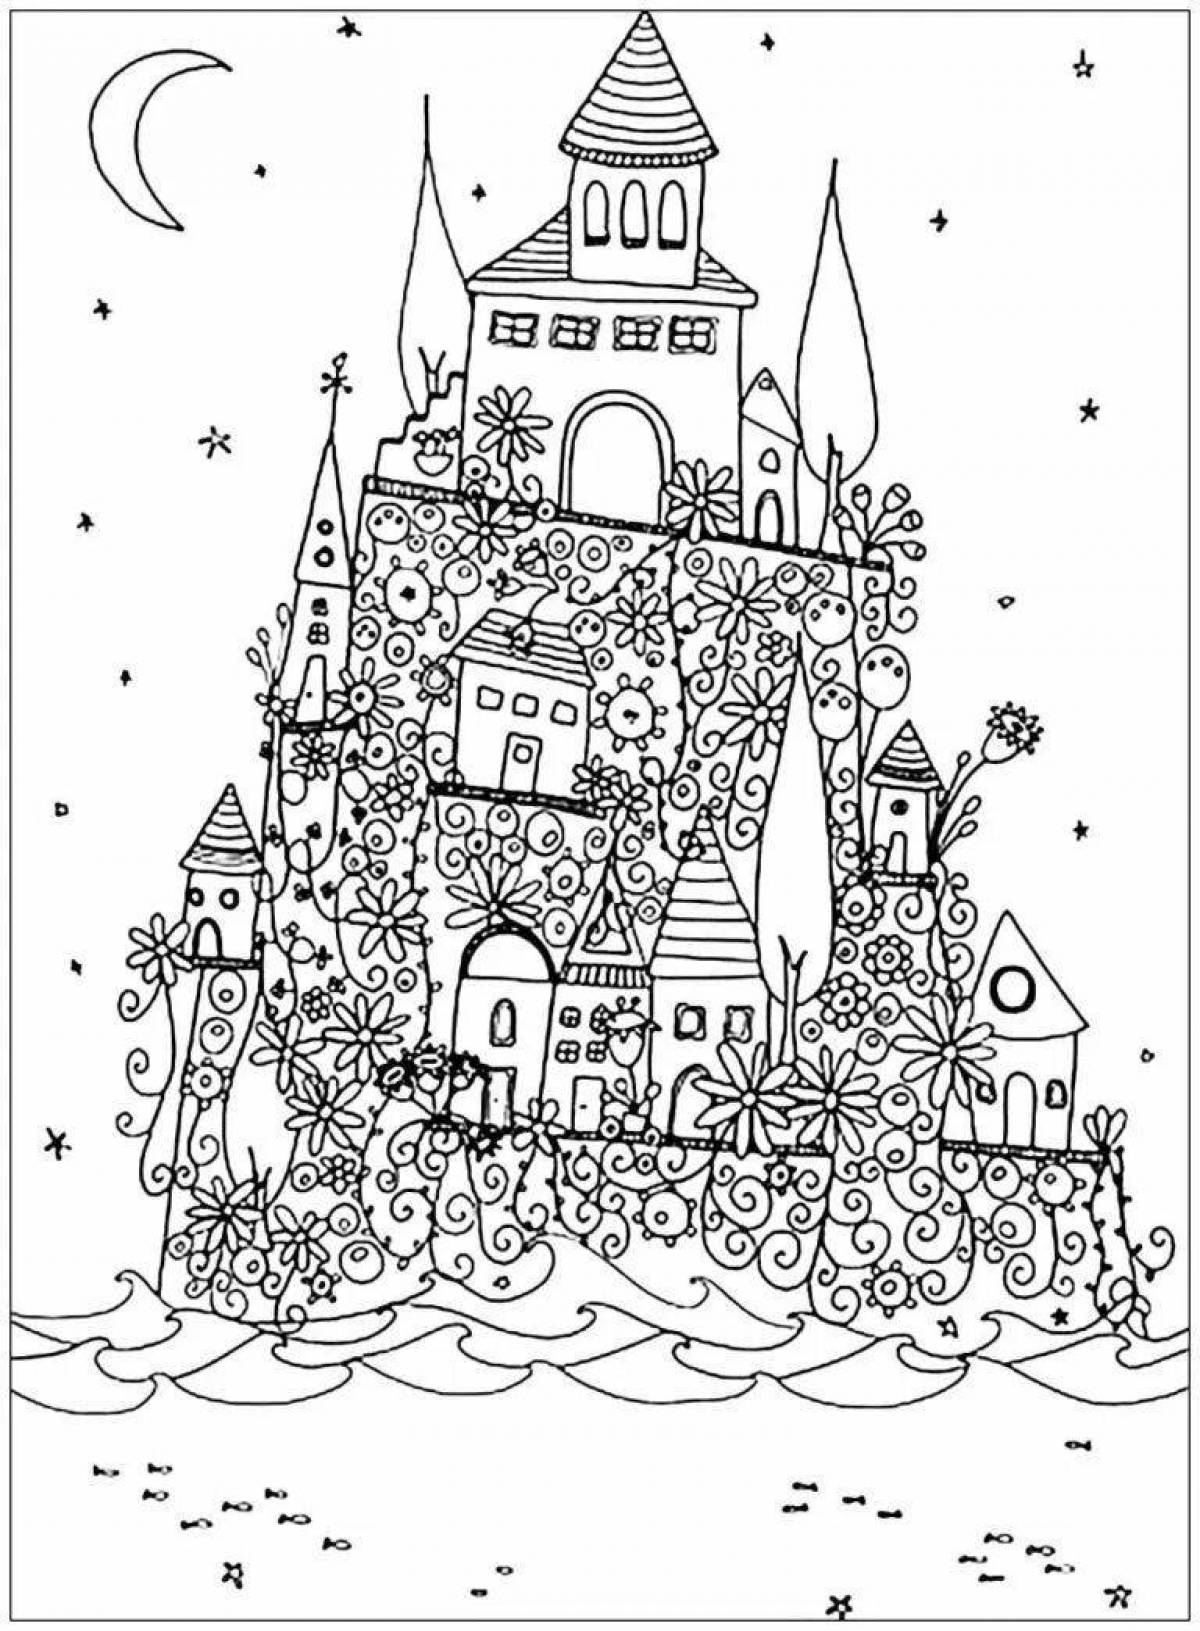 Wonderful magic castle coloring book